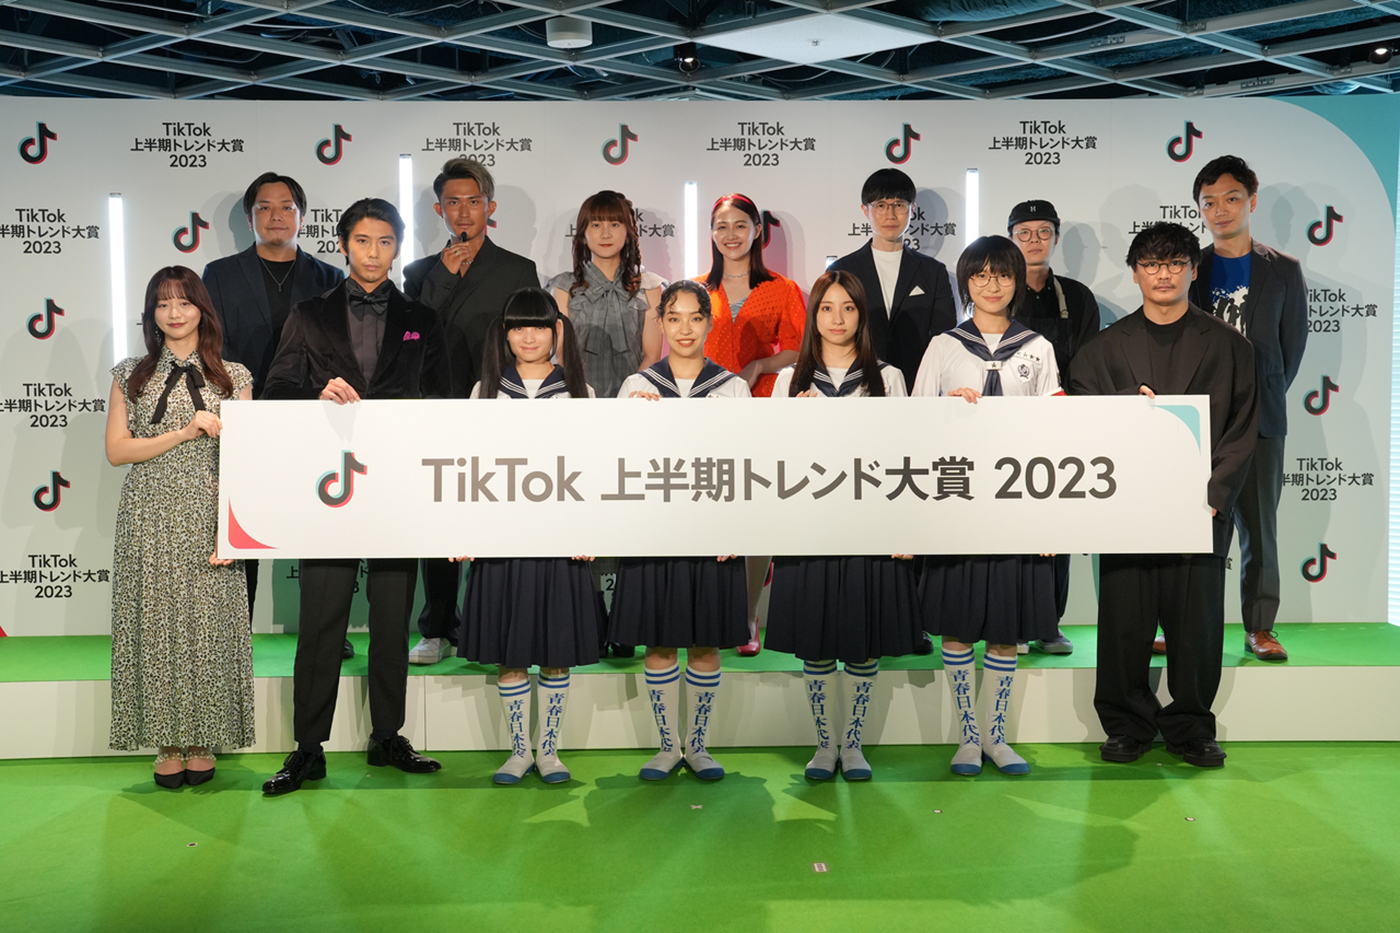 『TikTok上半期トレンド大賞2023』、大賞は新しい学校のリーダーズの「オトナブルー」に決定 - 画像一覧（14/14）